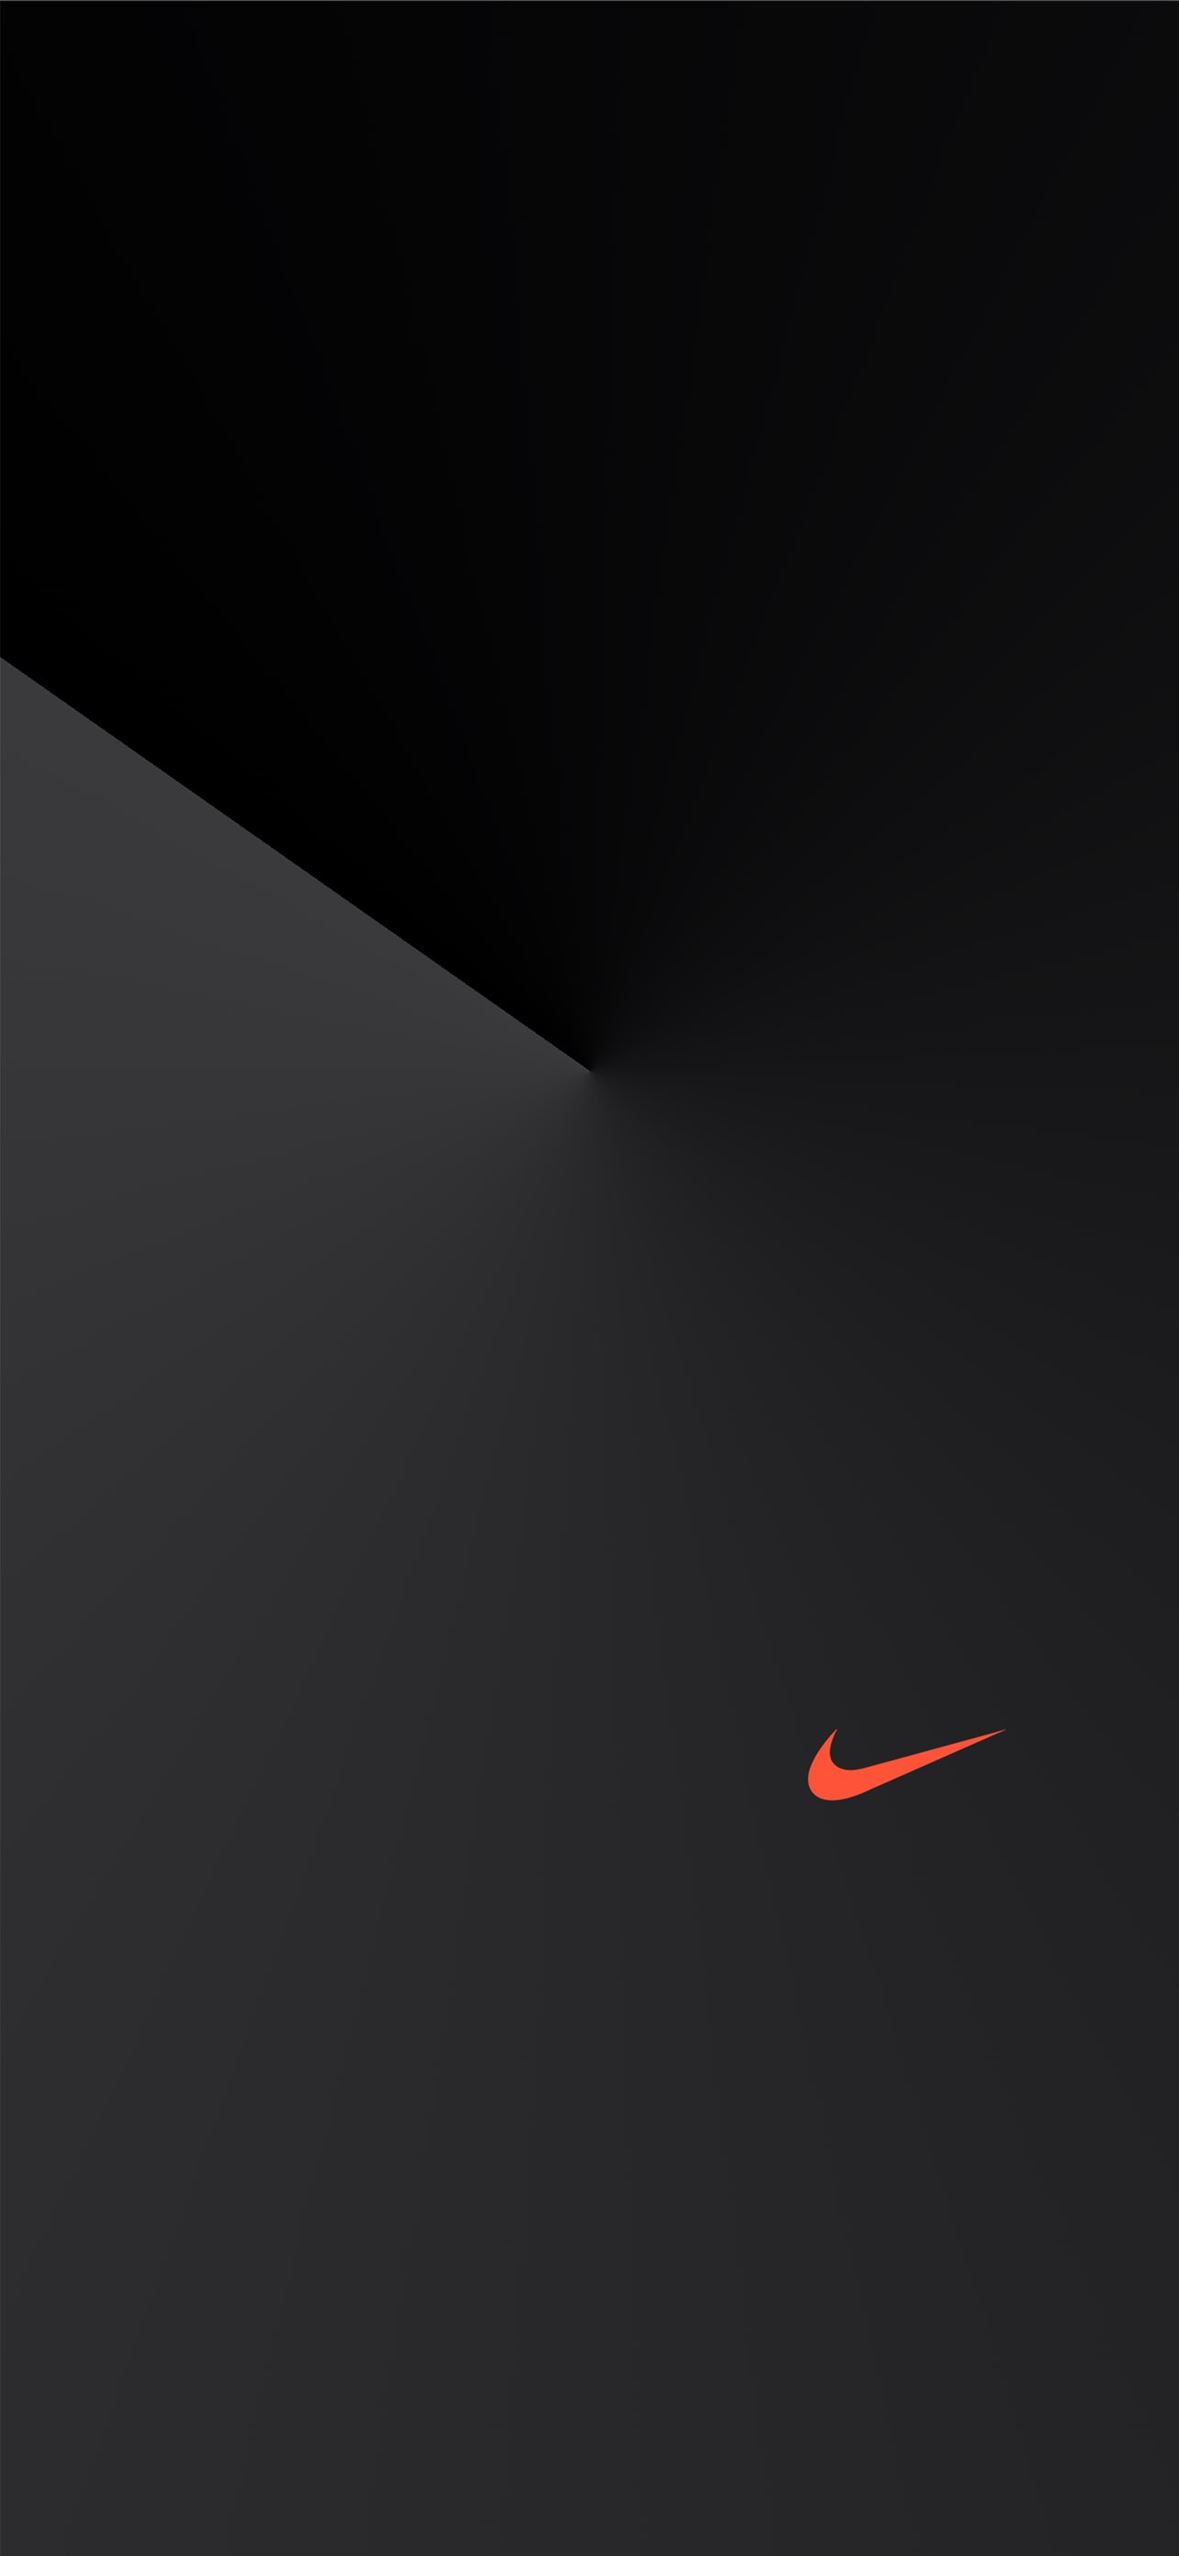 Orange and Black Nike logo Wallpaper Download  MobCup